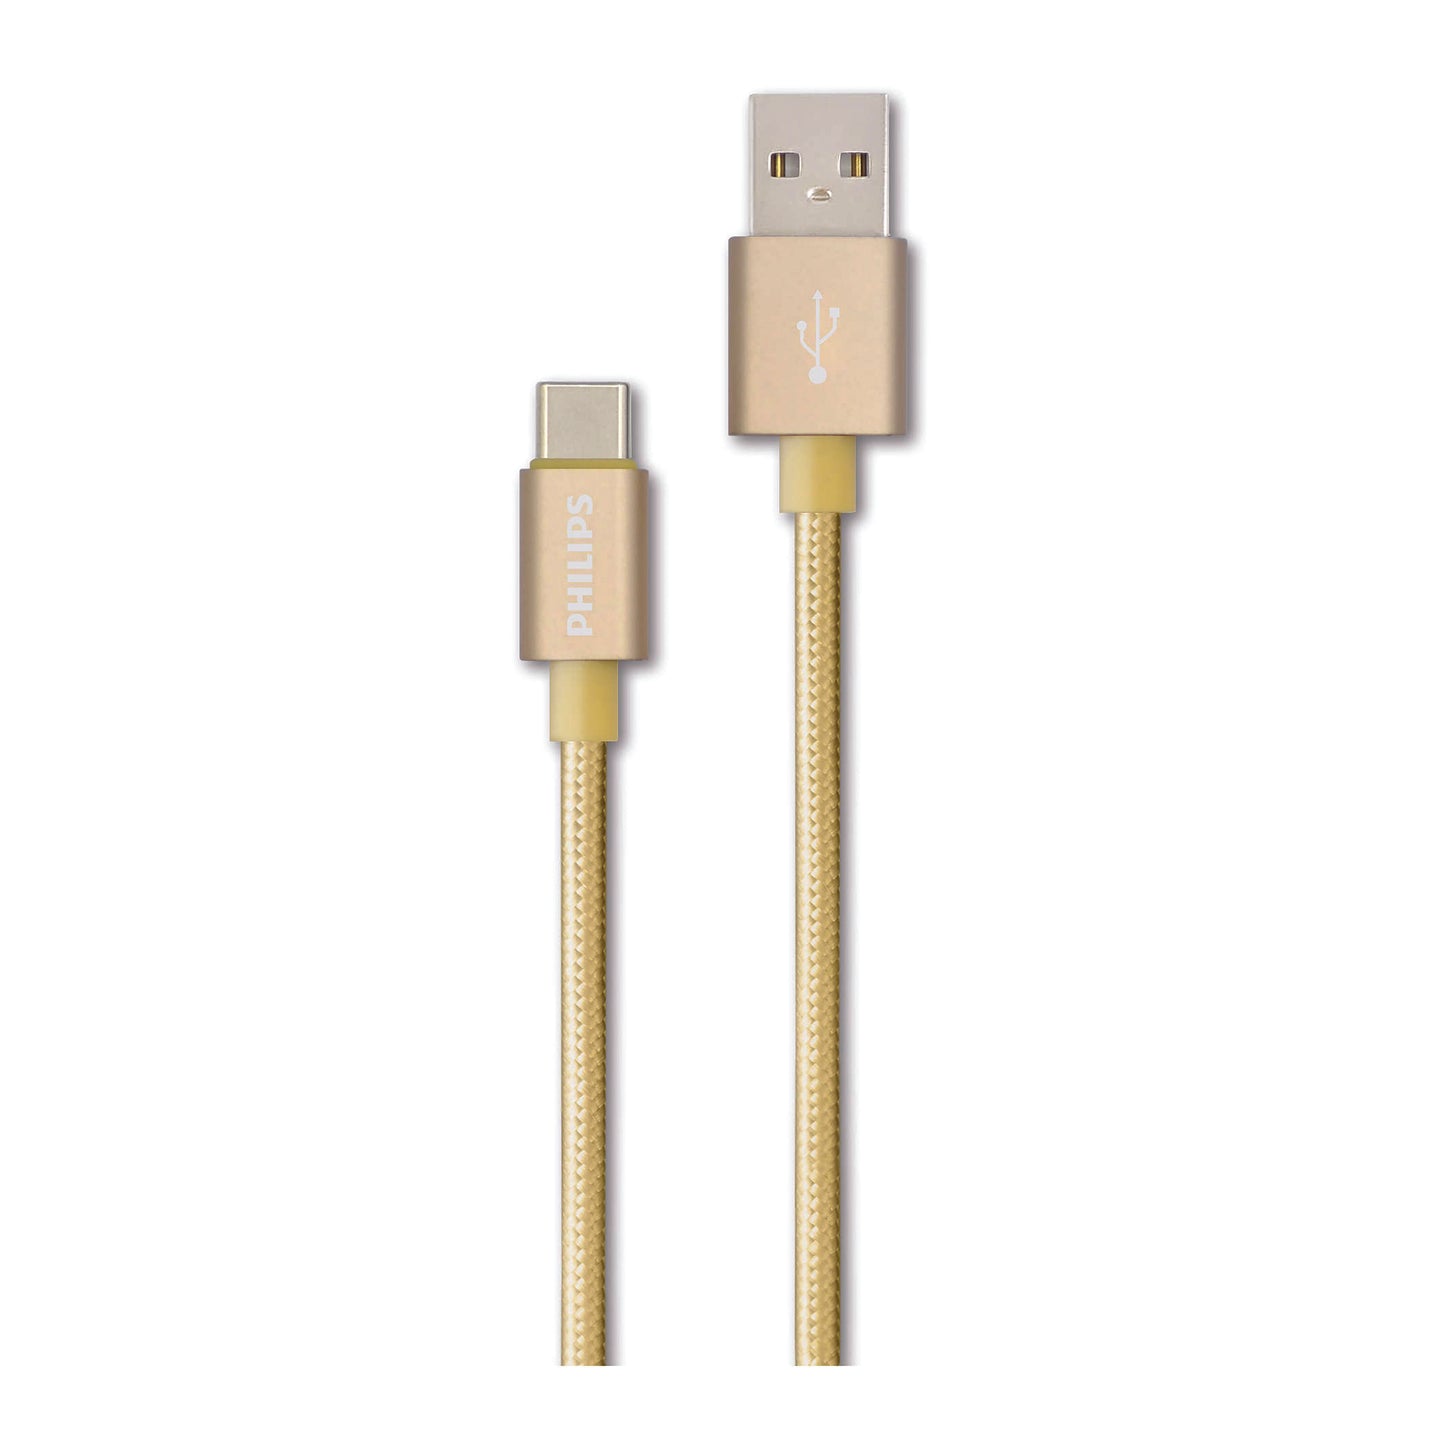 Philips USB-A to USB-C Cable 1.2m DLC2528M/DLC2528G